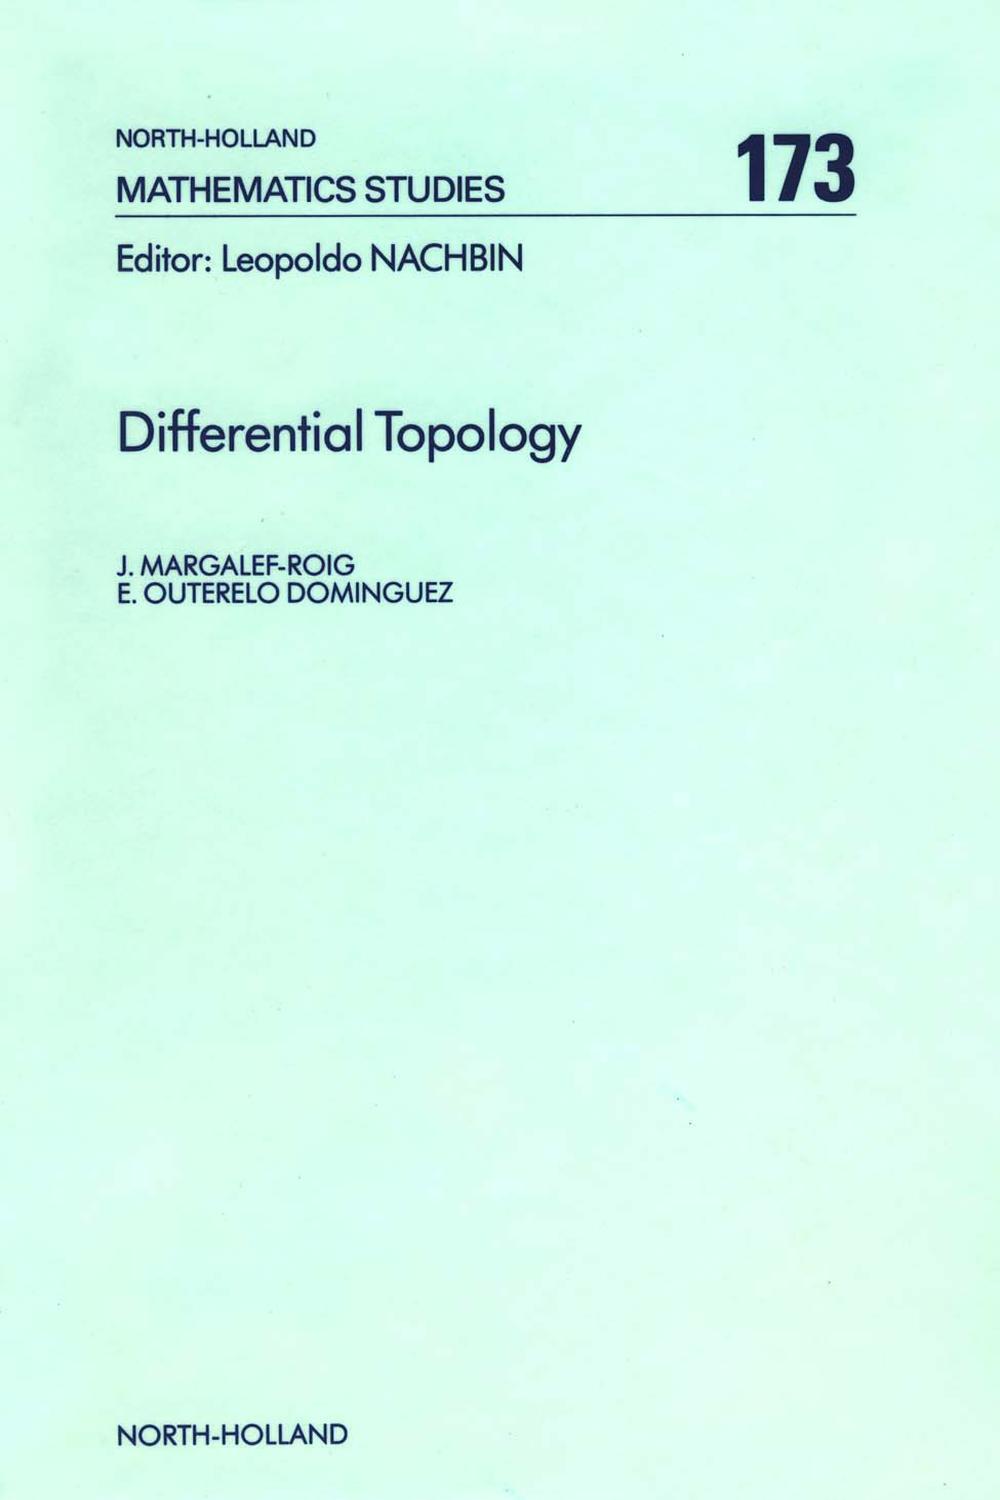 Differential Topology - J. Margalef-Roig, E. Outerelo Dominguez